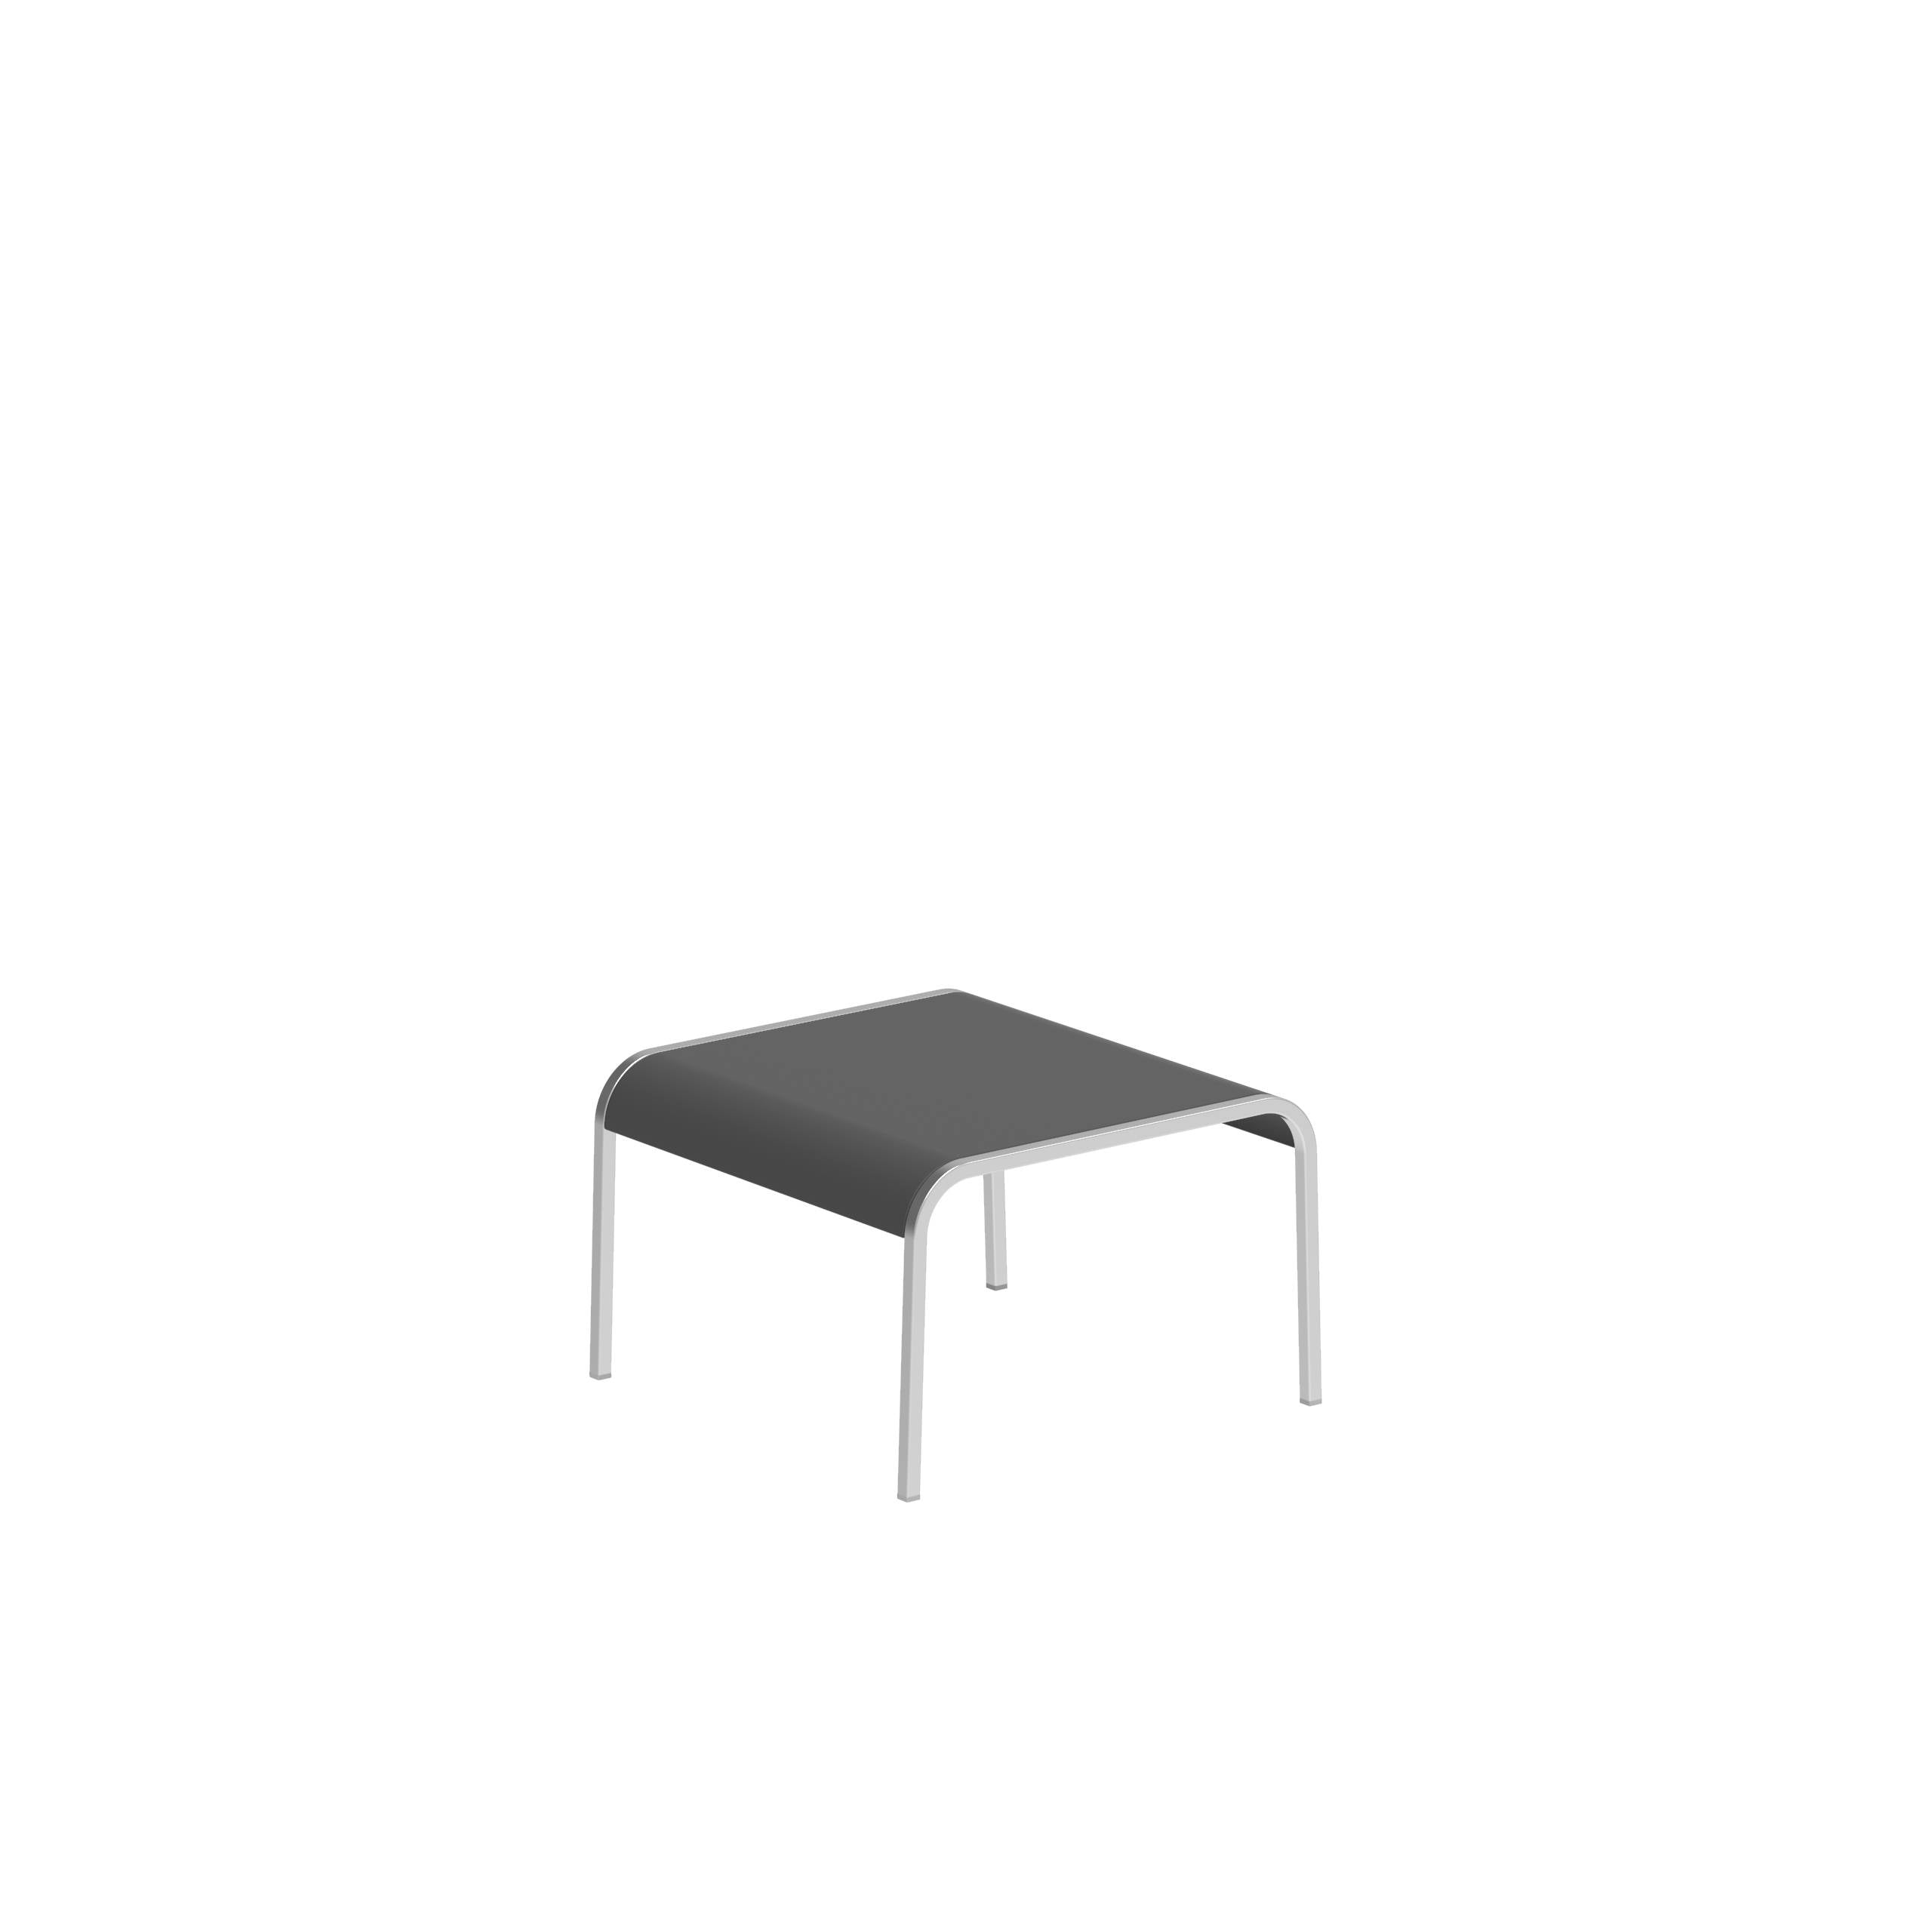 Qt50 Side Table 50x50cm With Alu Top Black El Pol